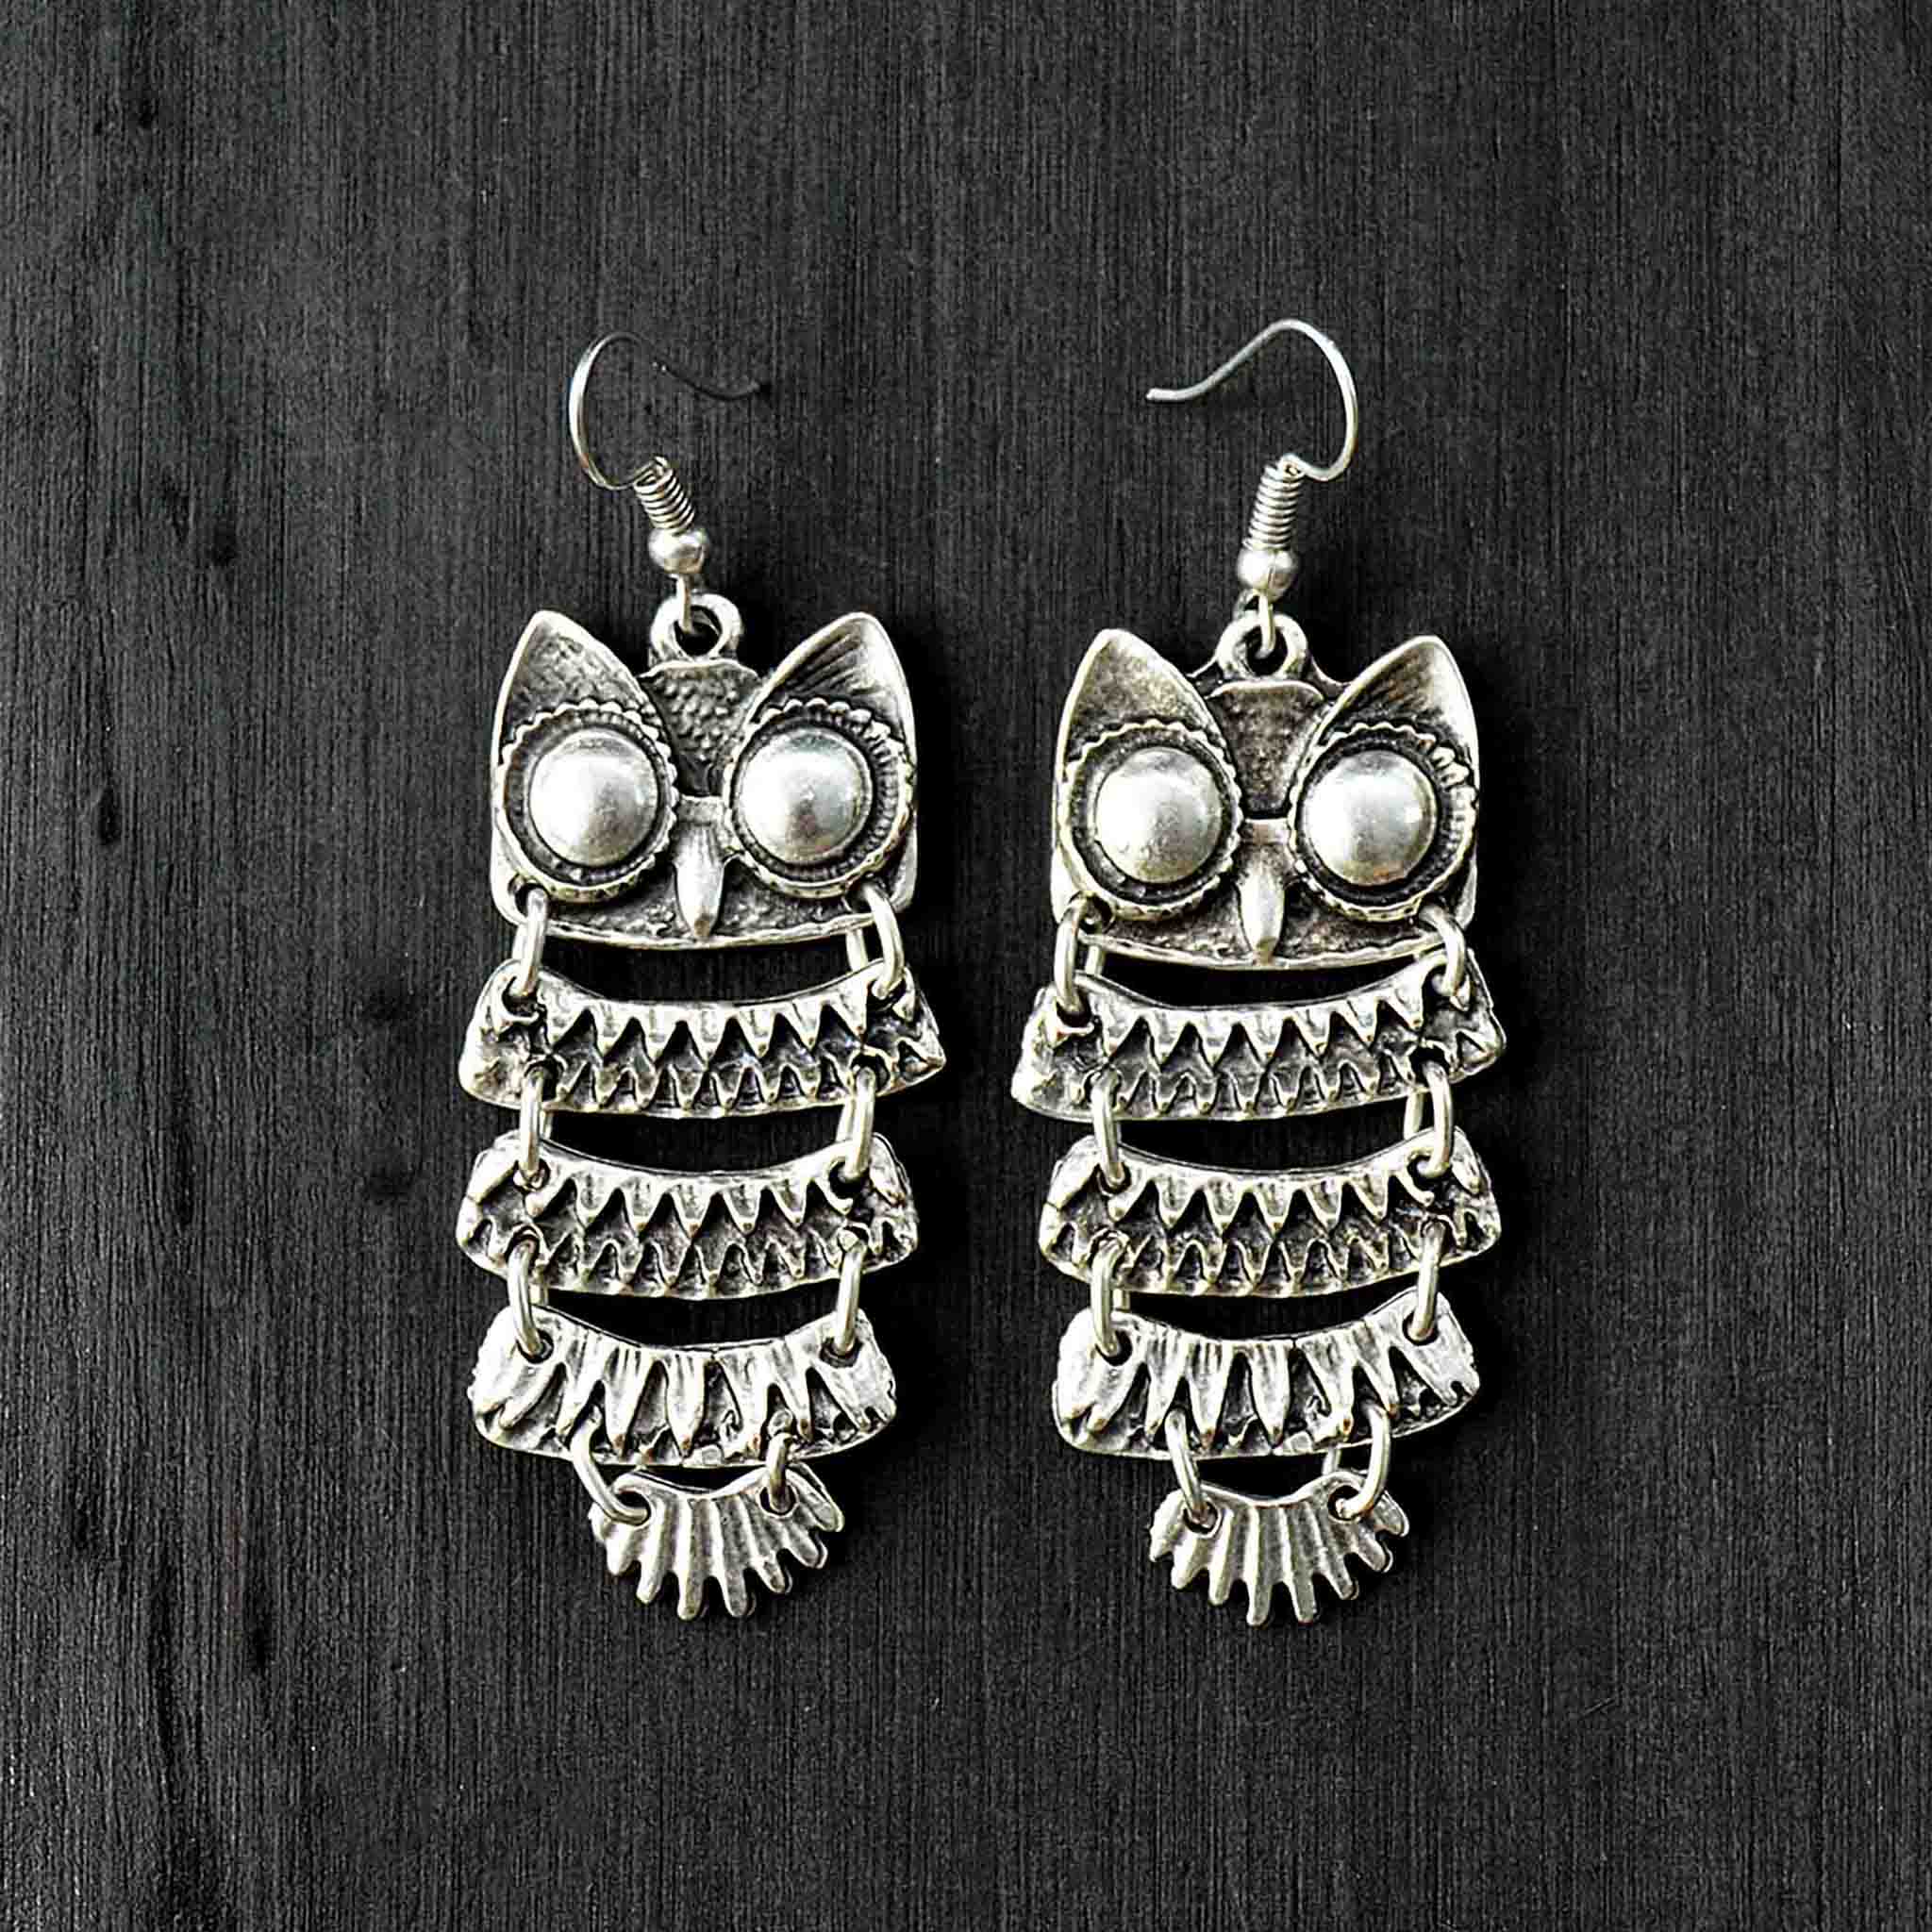 Silver dangle owl earrings on black background